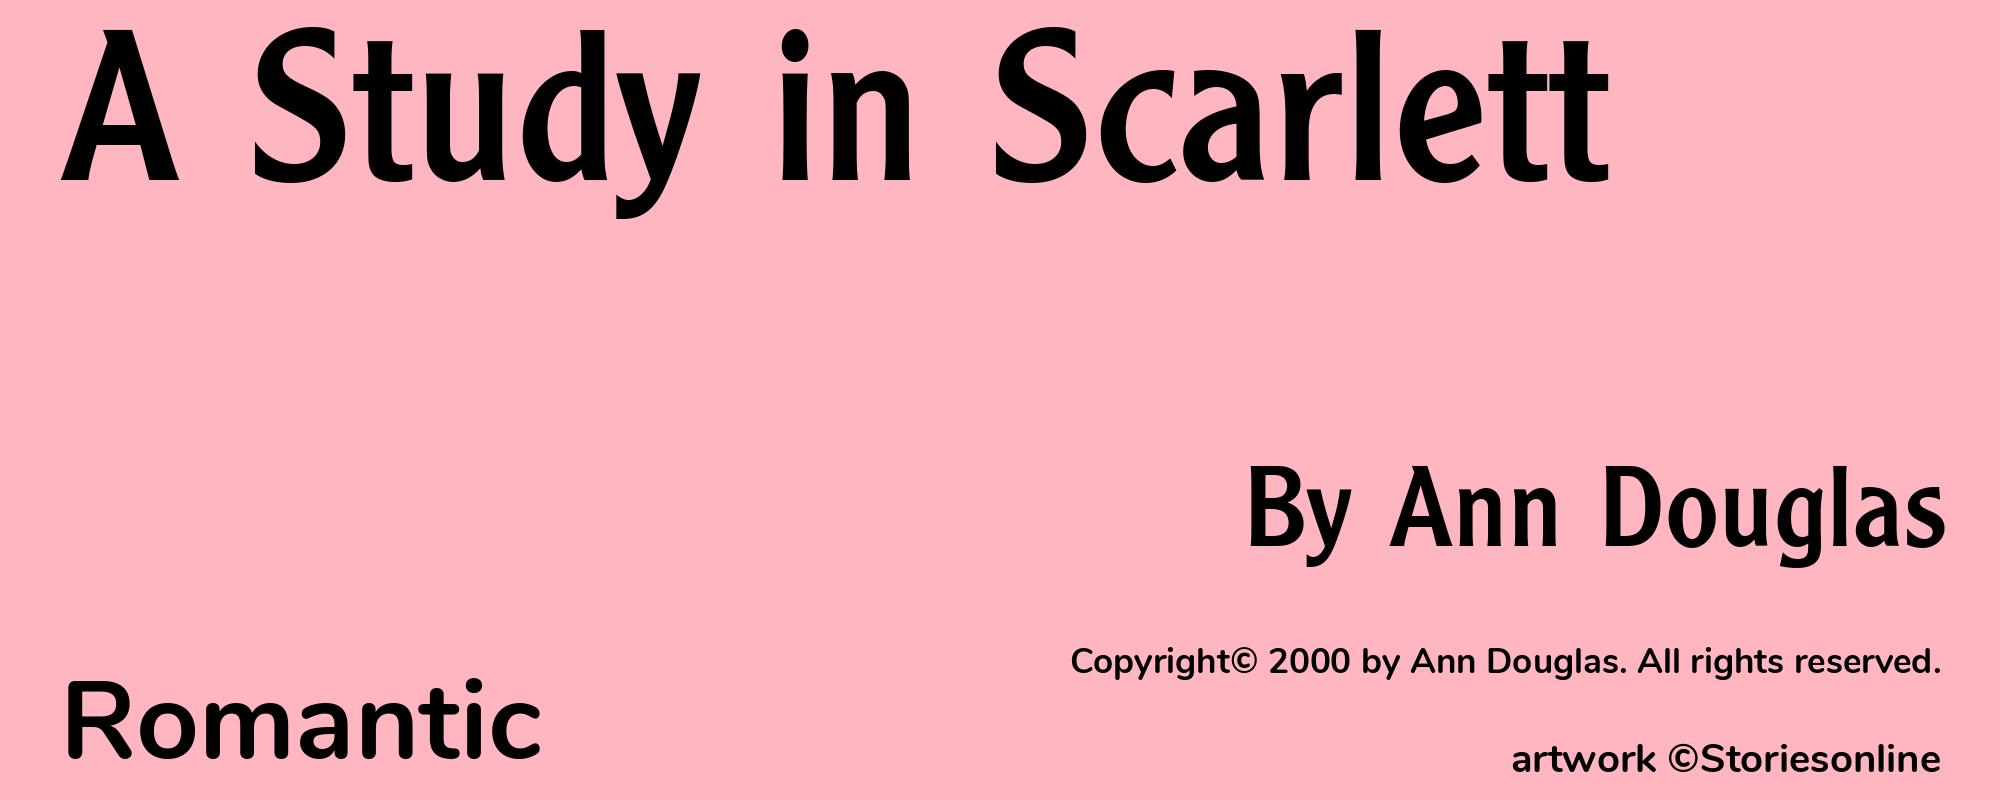 A Study in Scarlett - Cover